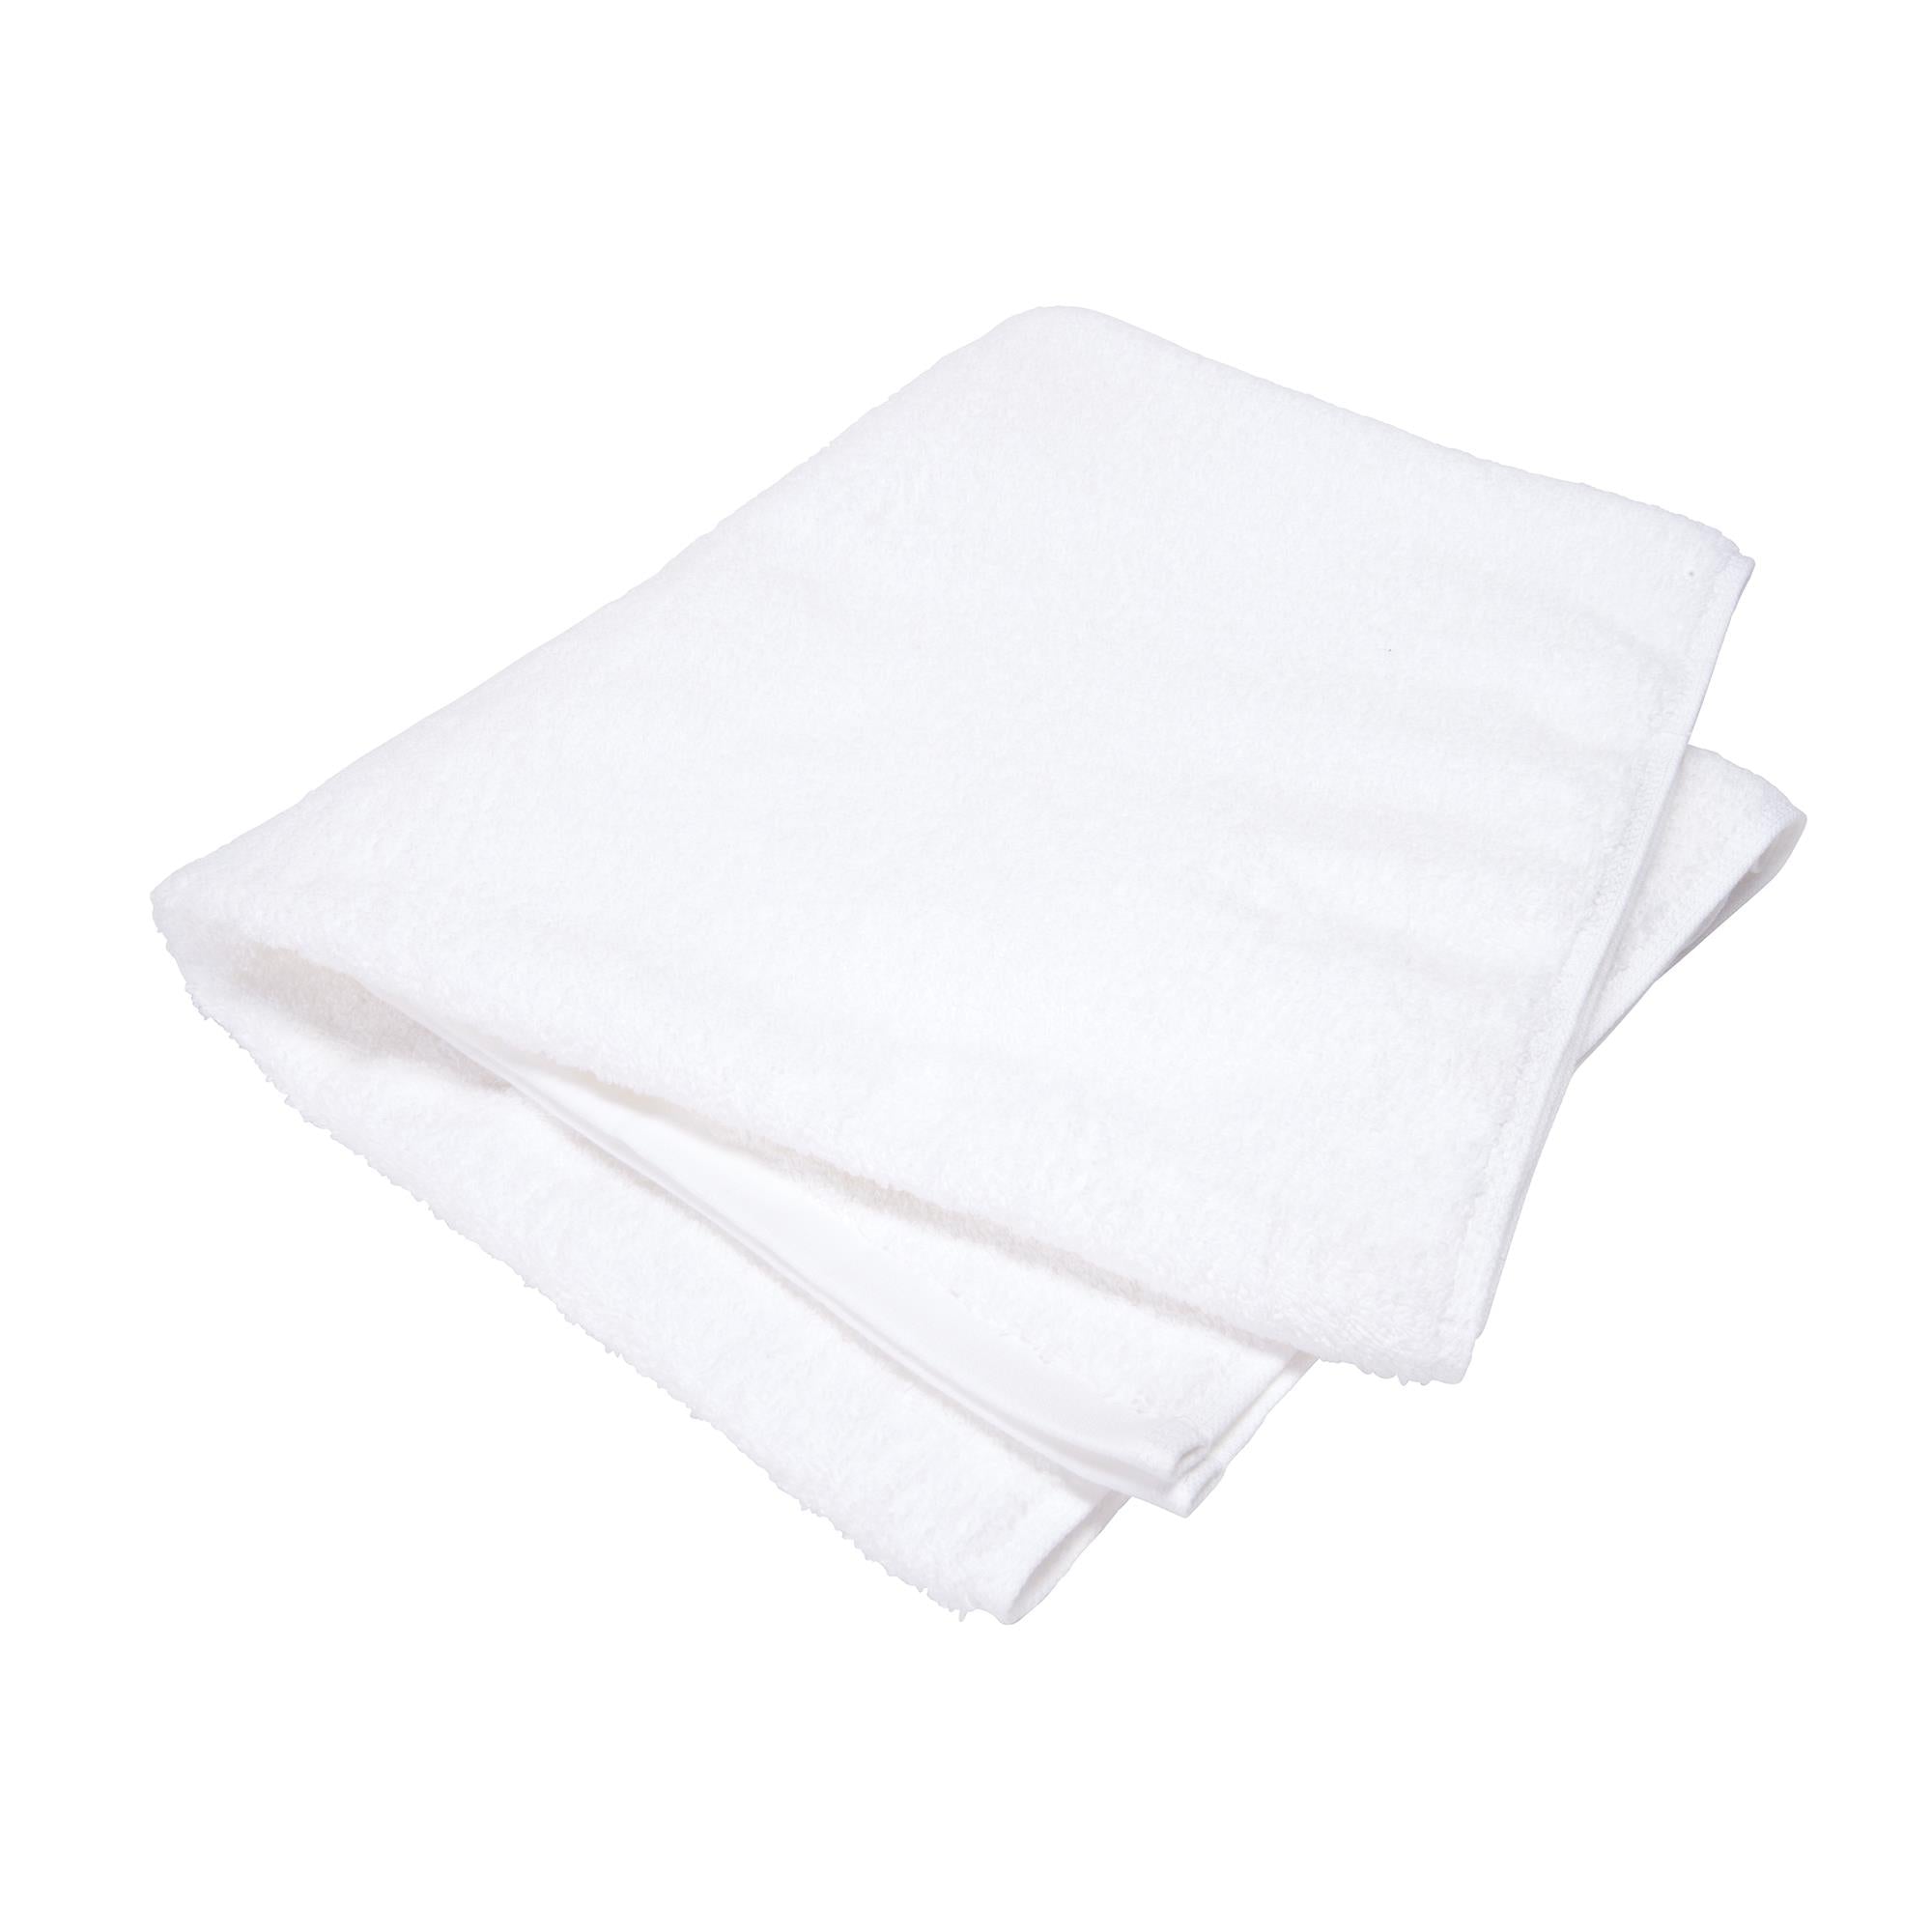 Sposh Professional Large Hand Towel White 600gsm 16x30